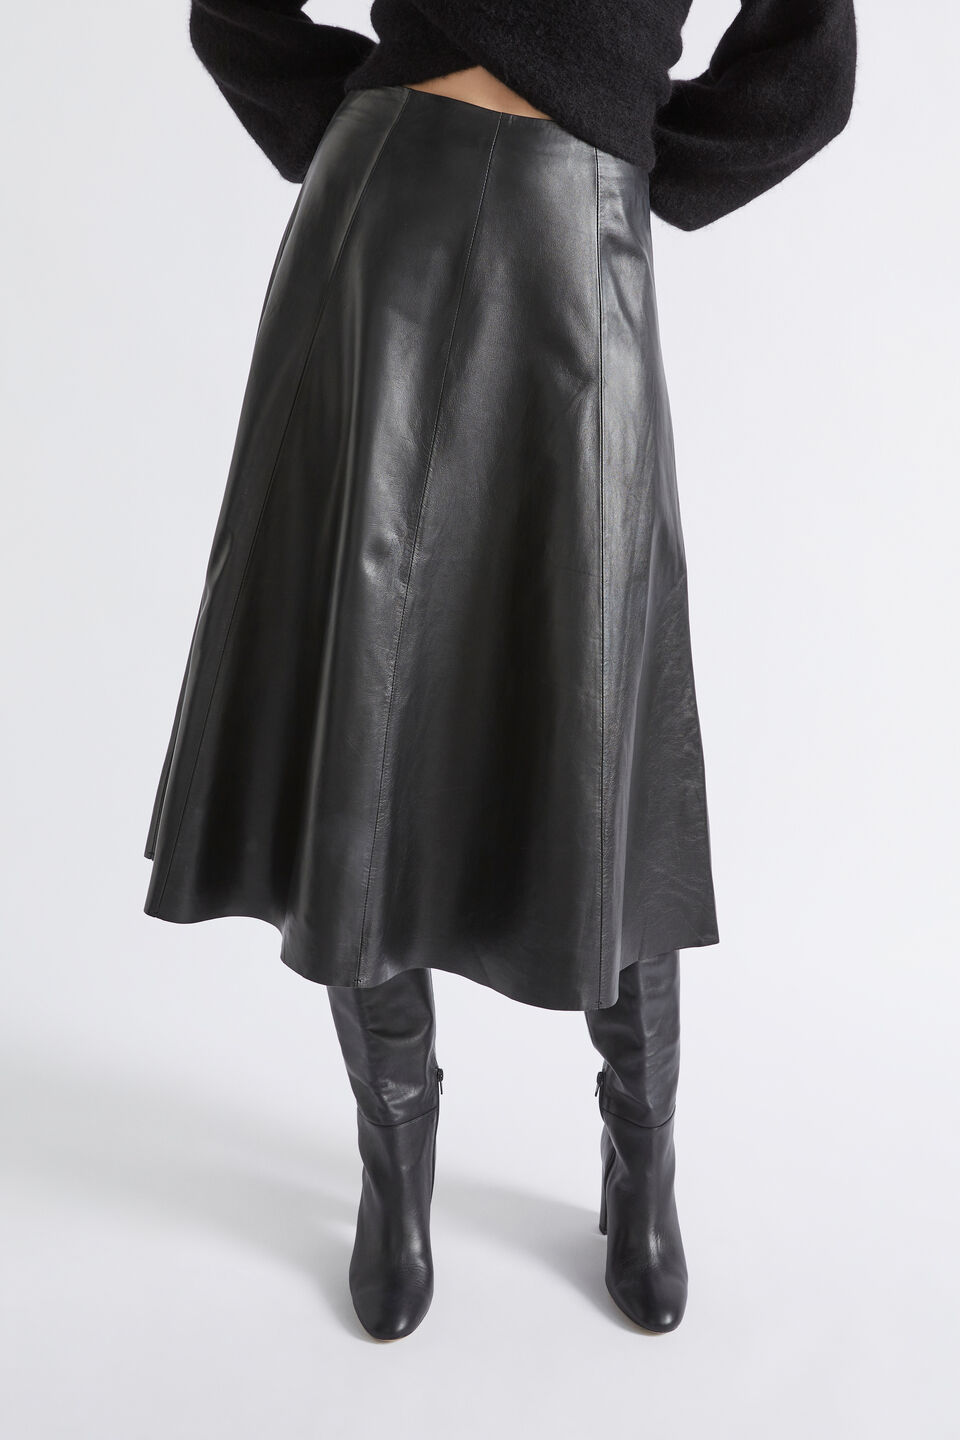 Leather Midi Circle Skirt  Black  hi-res